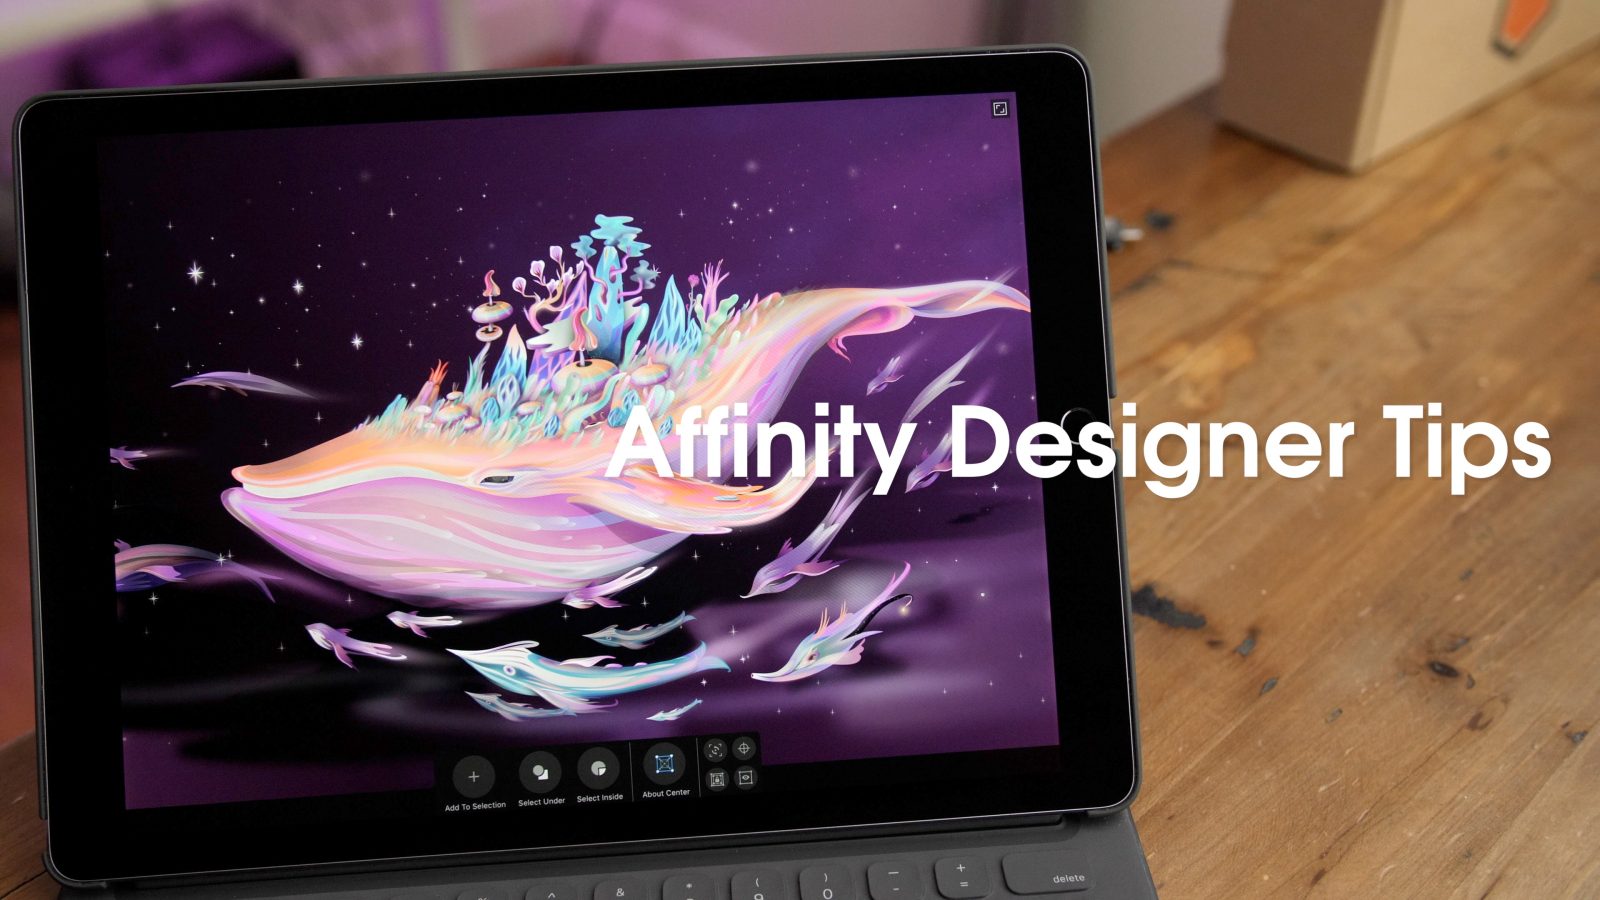 İşaretle bulutlu Madison  Affinity Designer for iPad: 20+ getting started tips and tricks [Video] -  9to5Mac